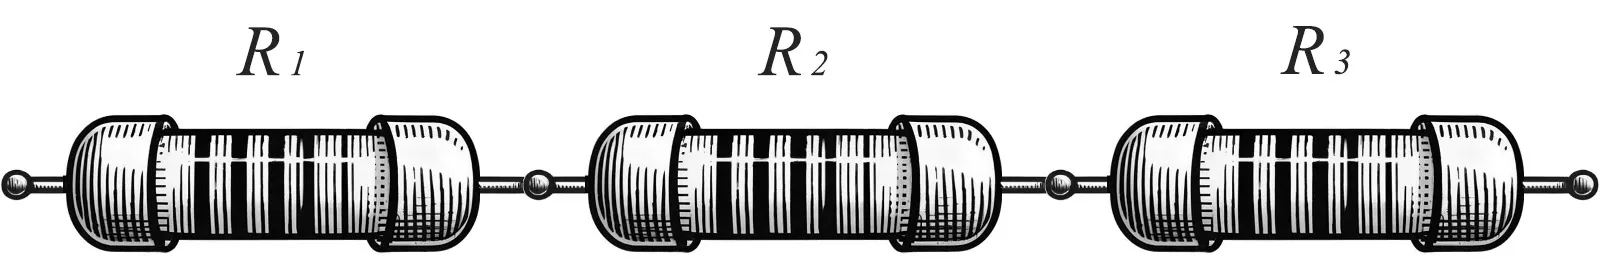 illustration of capacitors in series